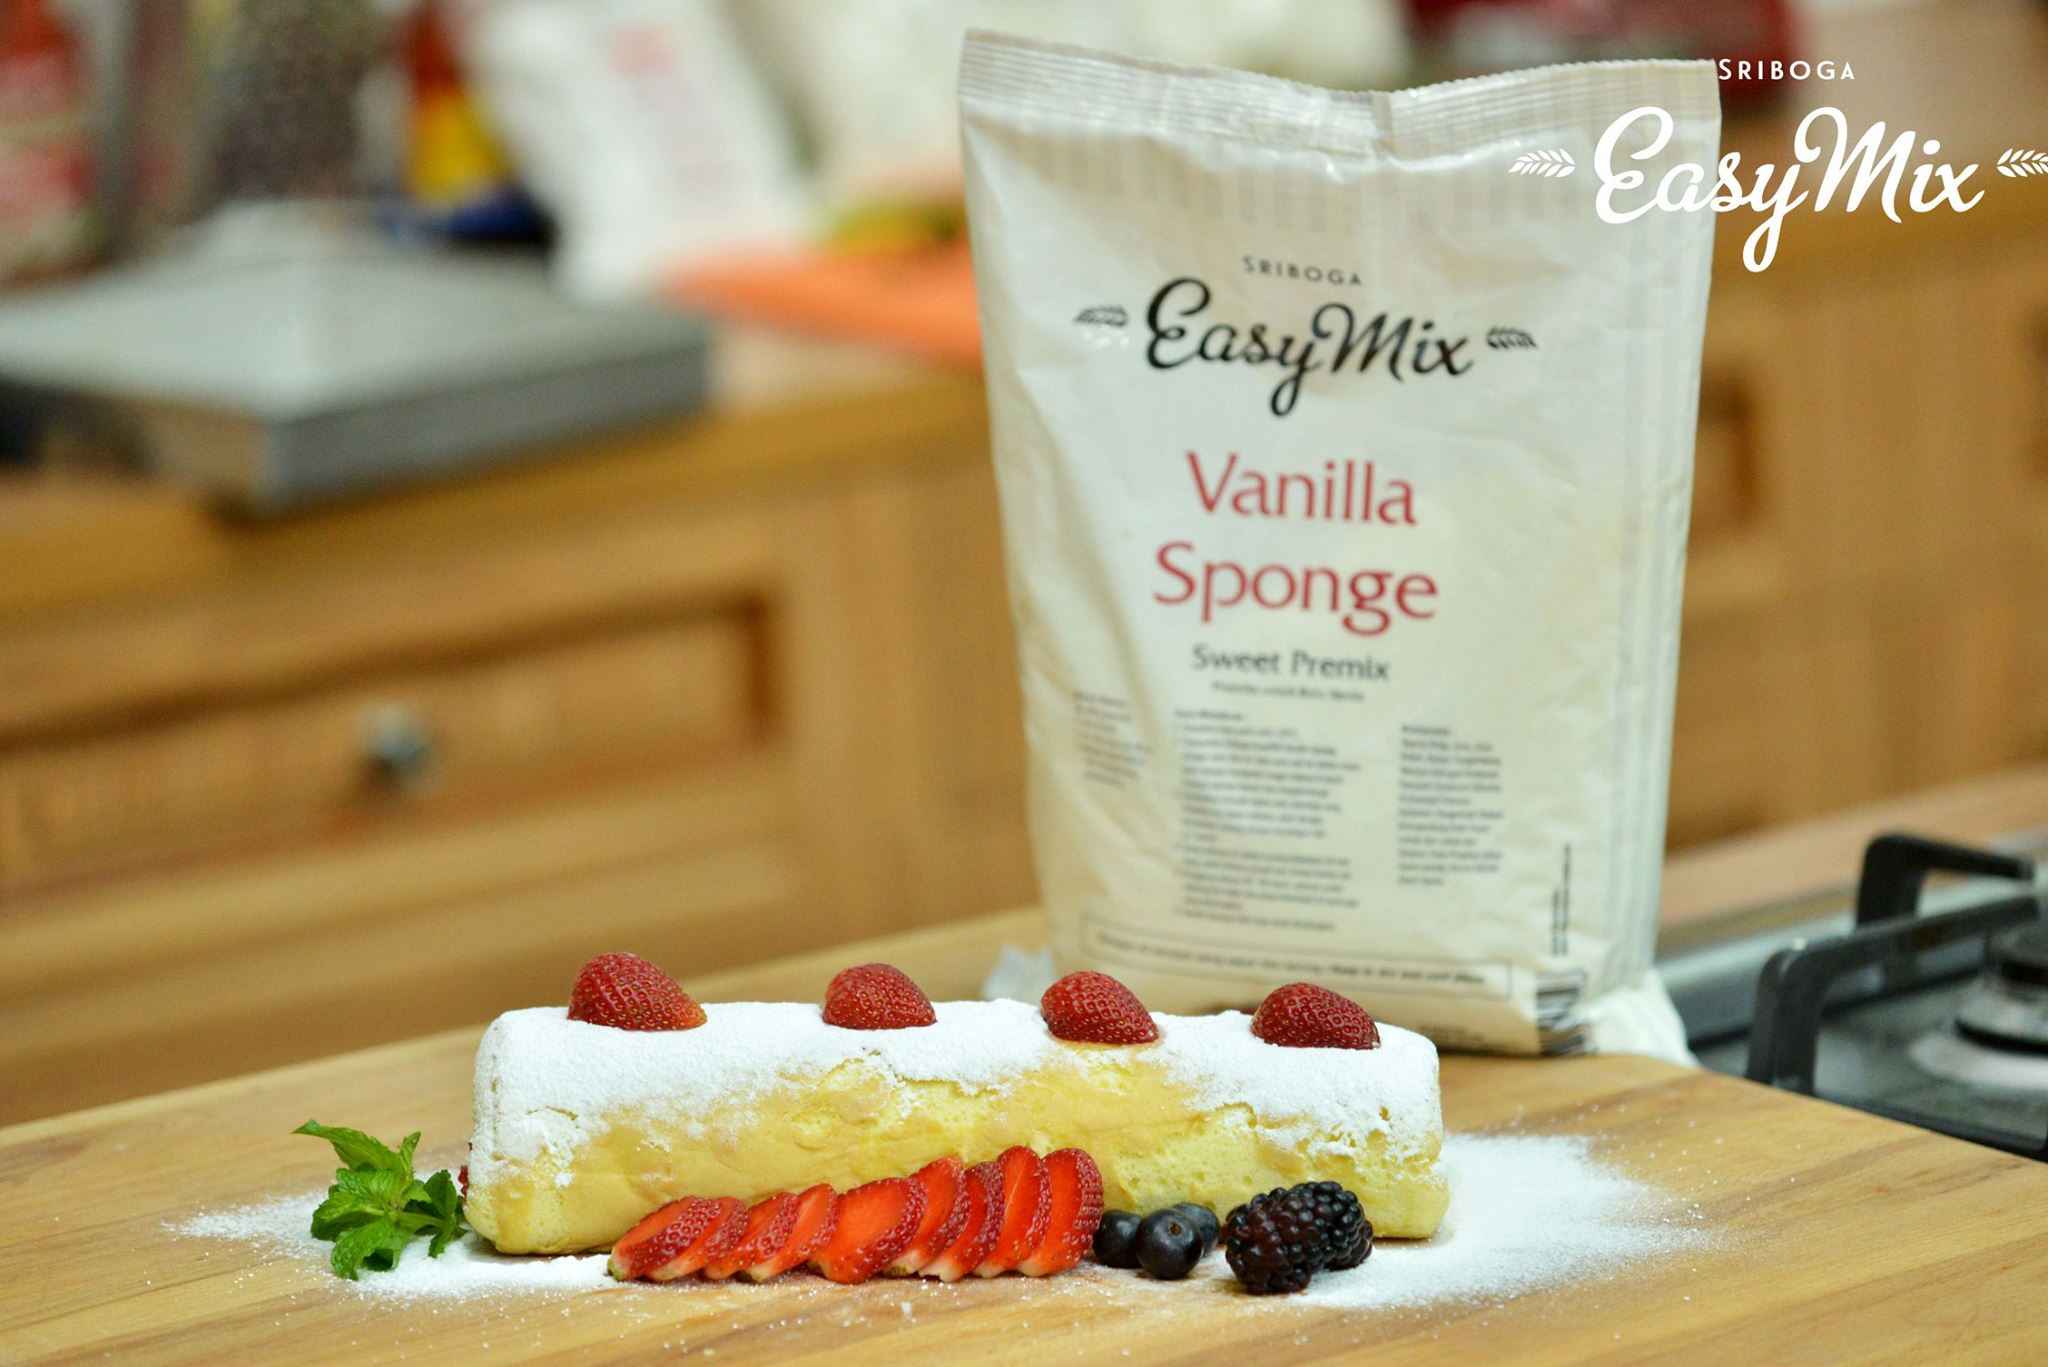 A roll sponge cake made with Sriboga Easymix Vanilla Sponge